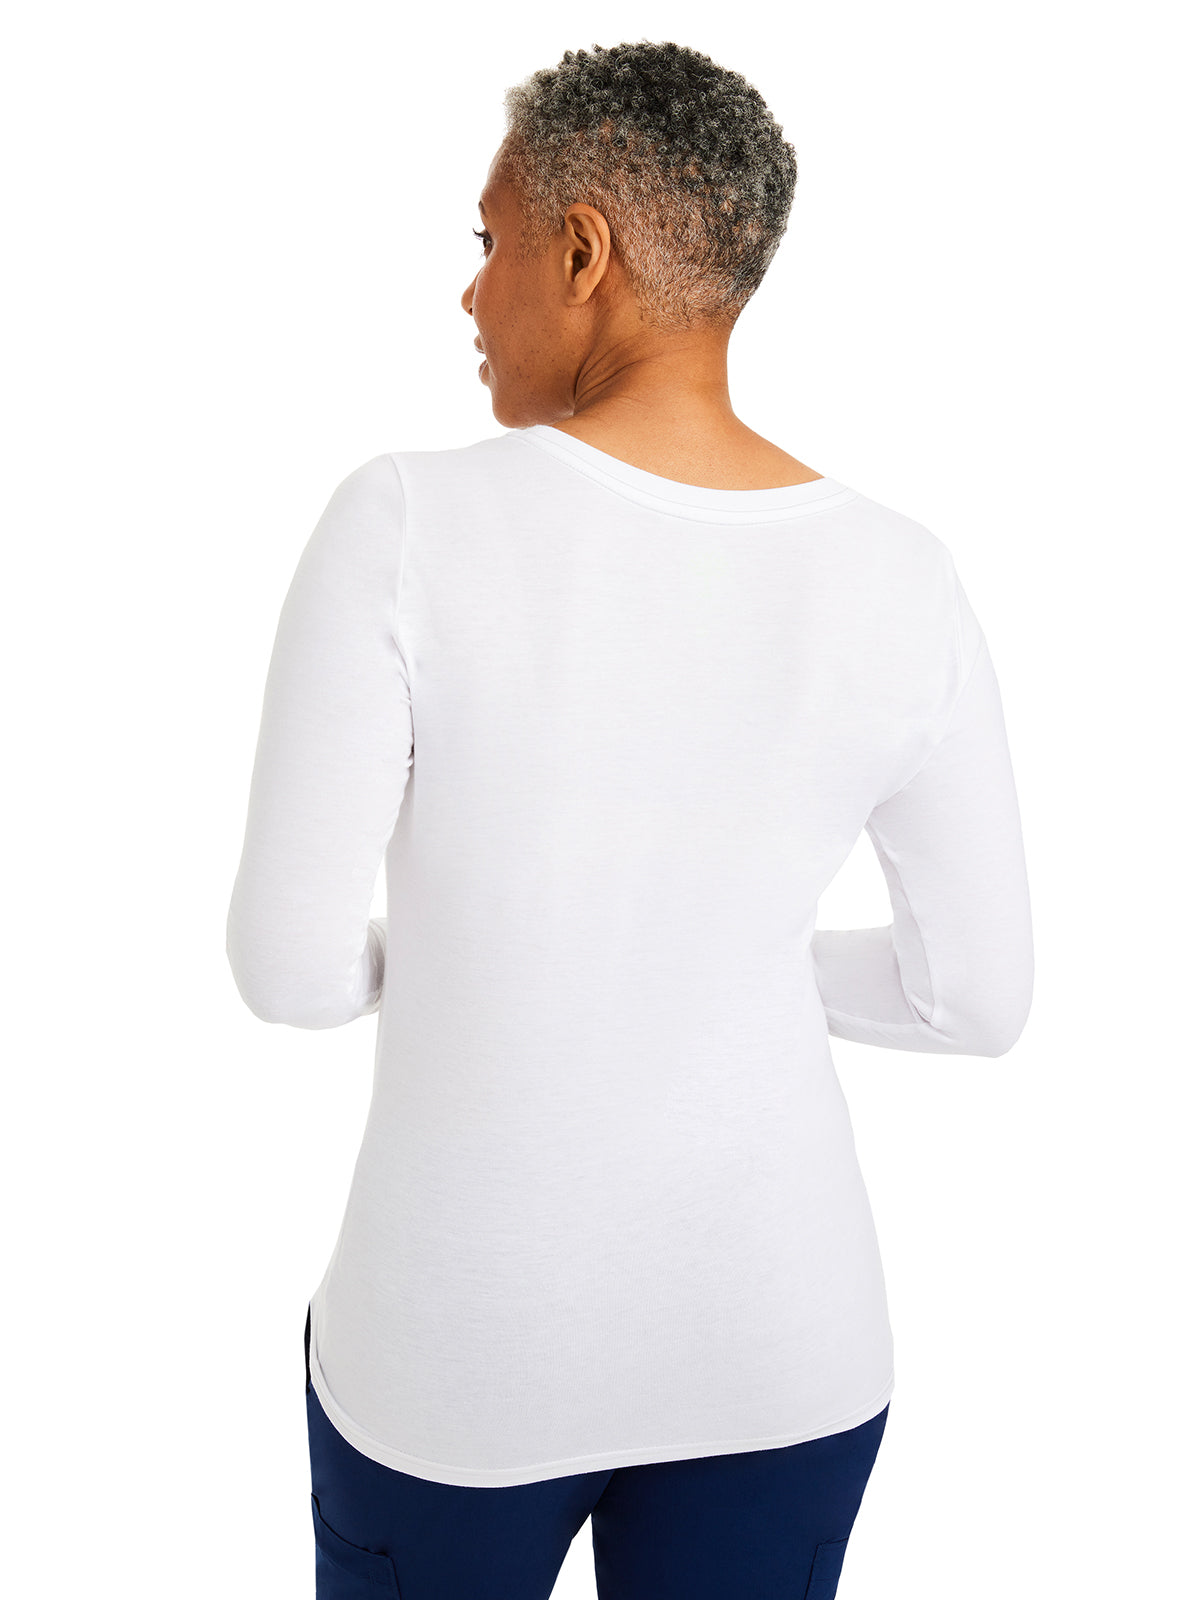 Women's Long Sleeve Underscrub Tee - 5047 - White